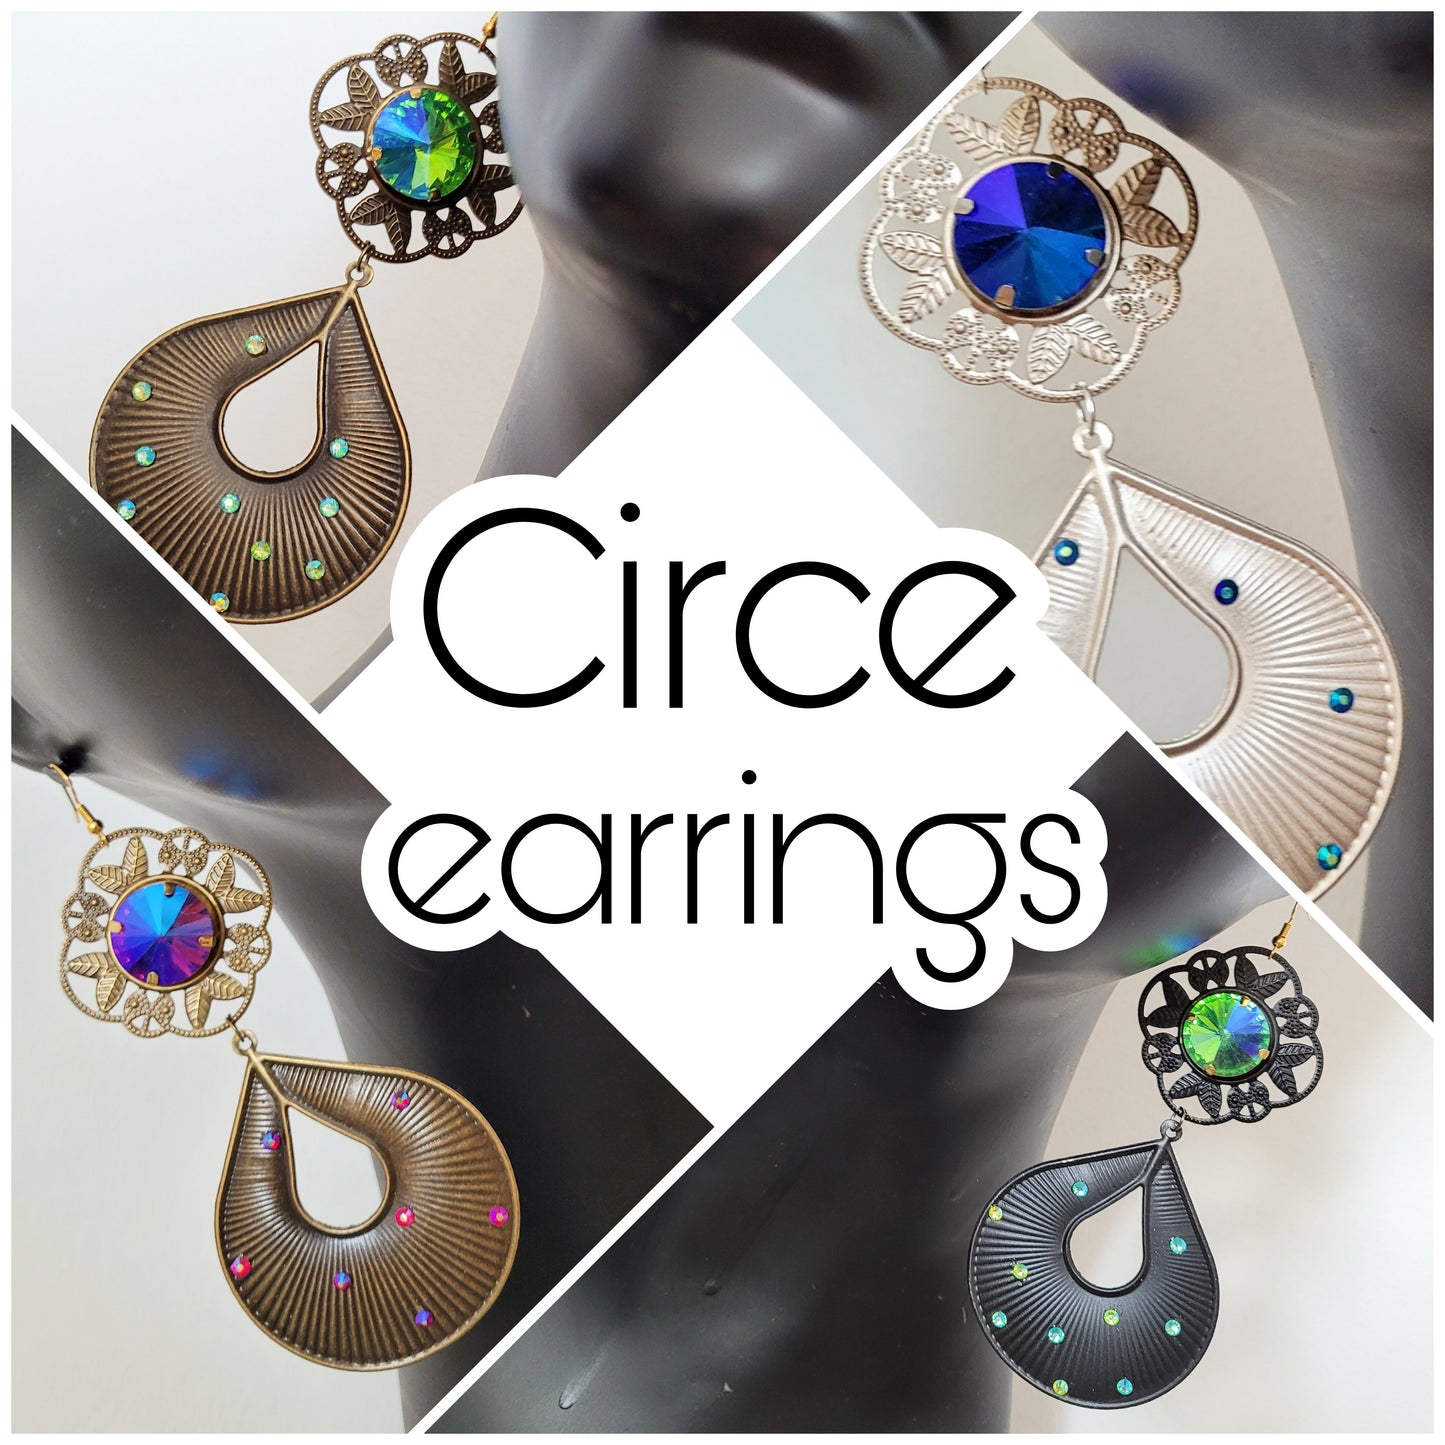 Deusa ex Machina collection: The Circe earrings